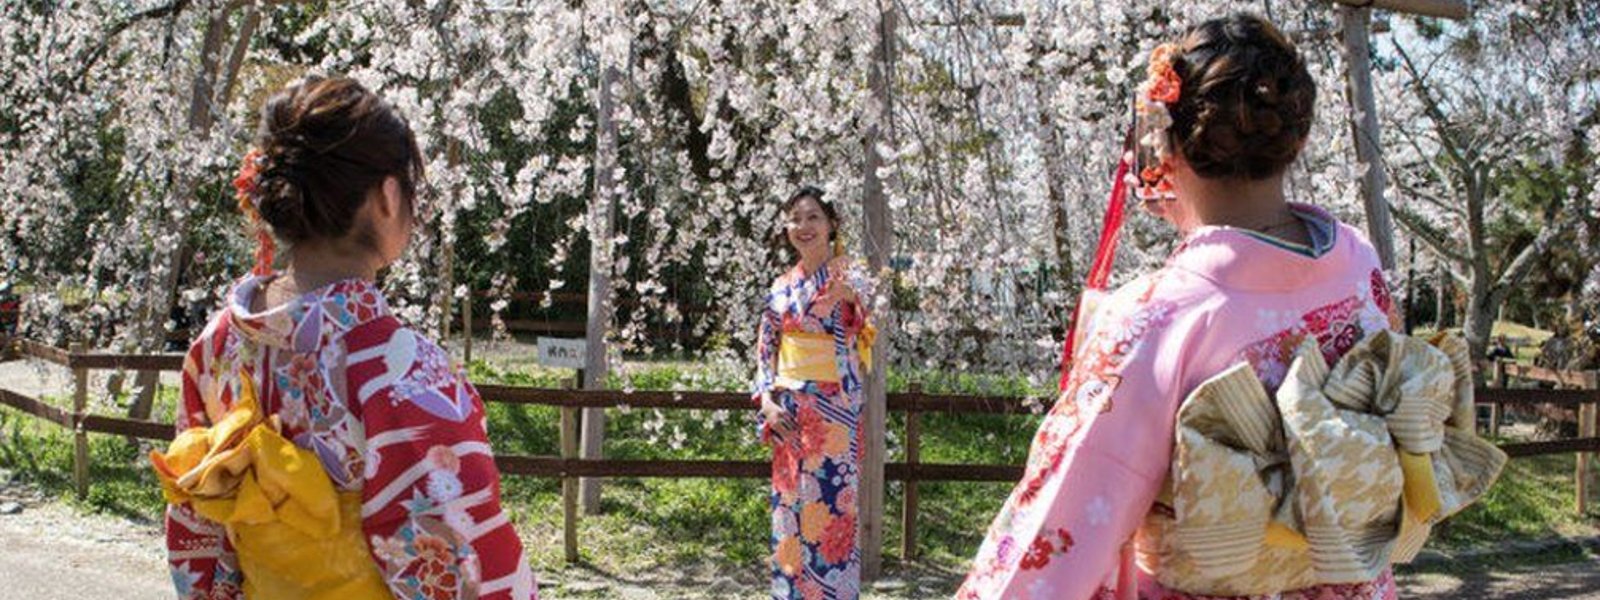 Japan’s cherry blossom ‘earliest peak since 812’